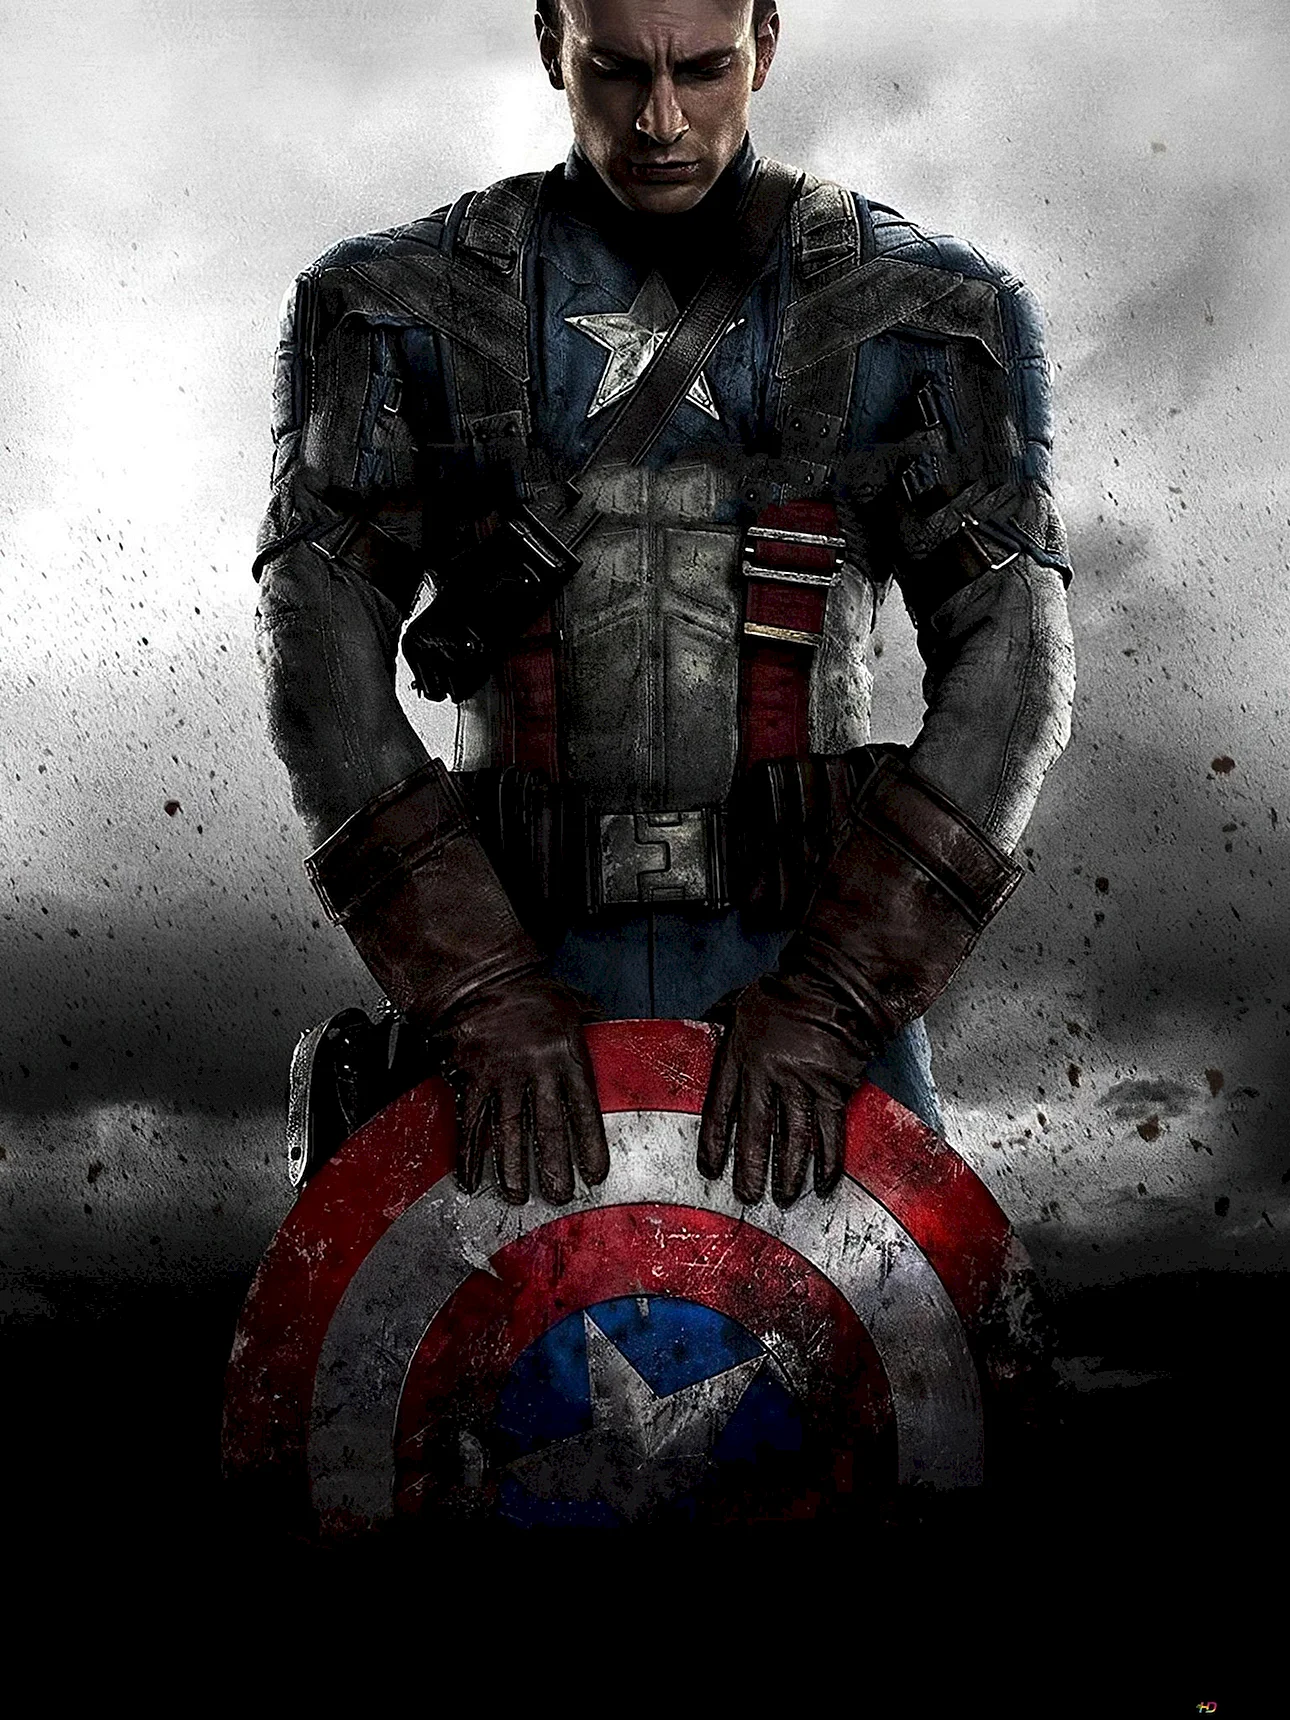 Captain America The First Avenger Wallpaper For iPhone